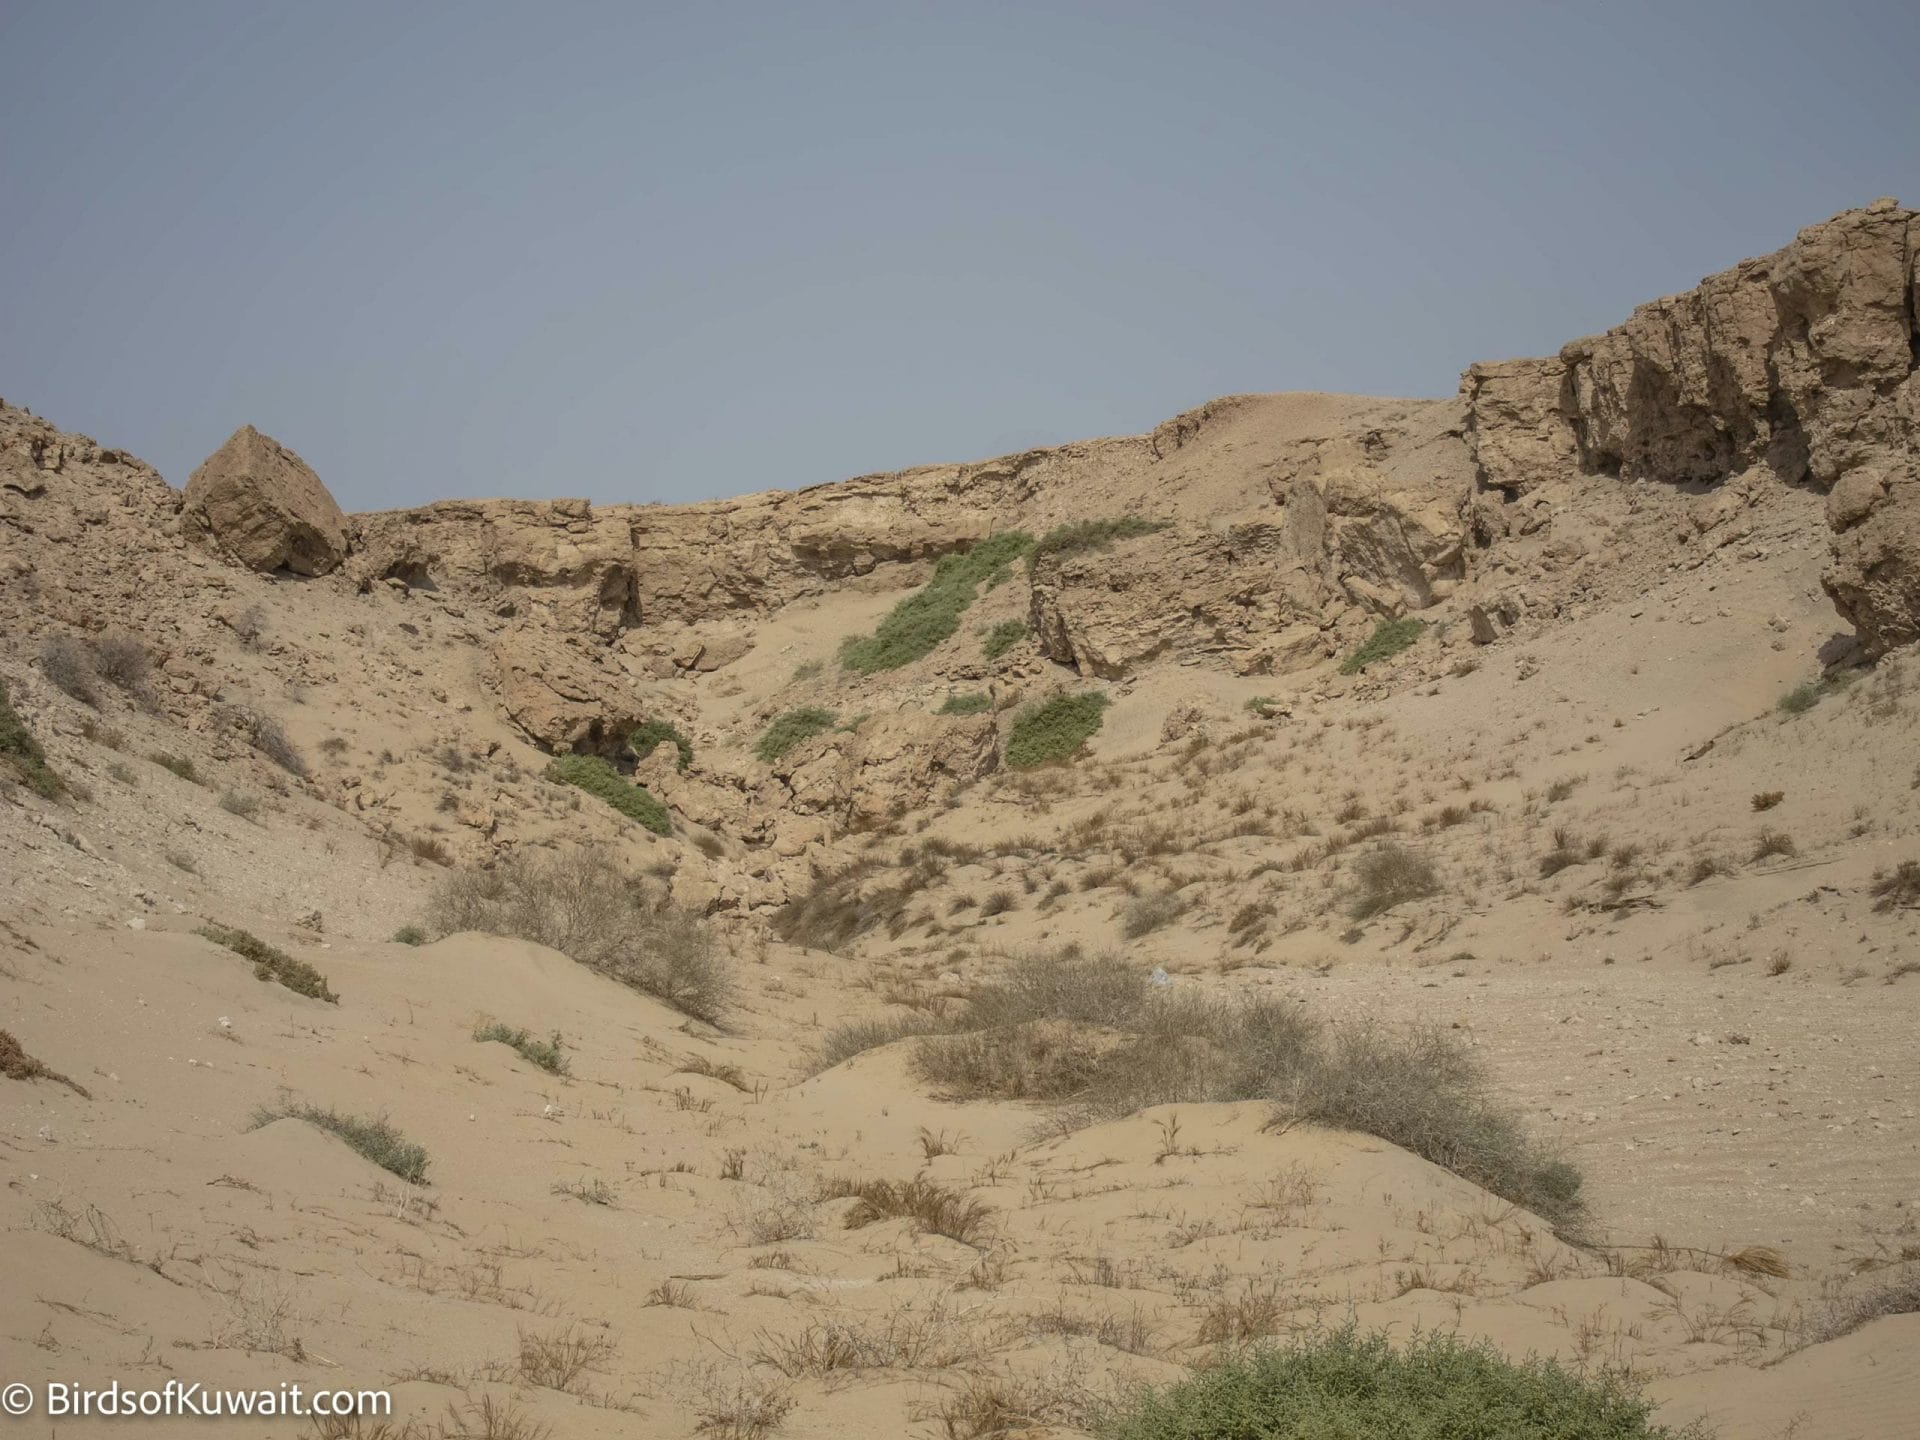 Birding Sites in Kuwait: Sabah Al-Ahmad Natural Reserve